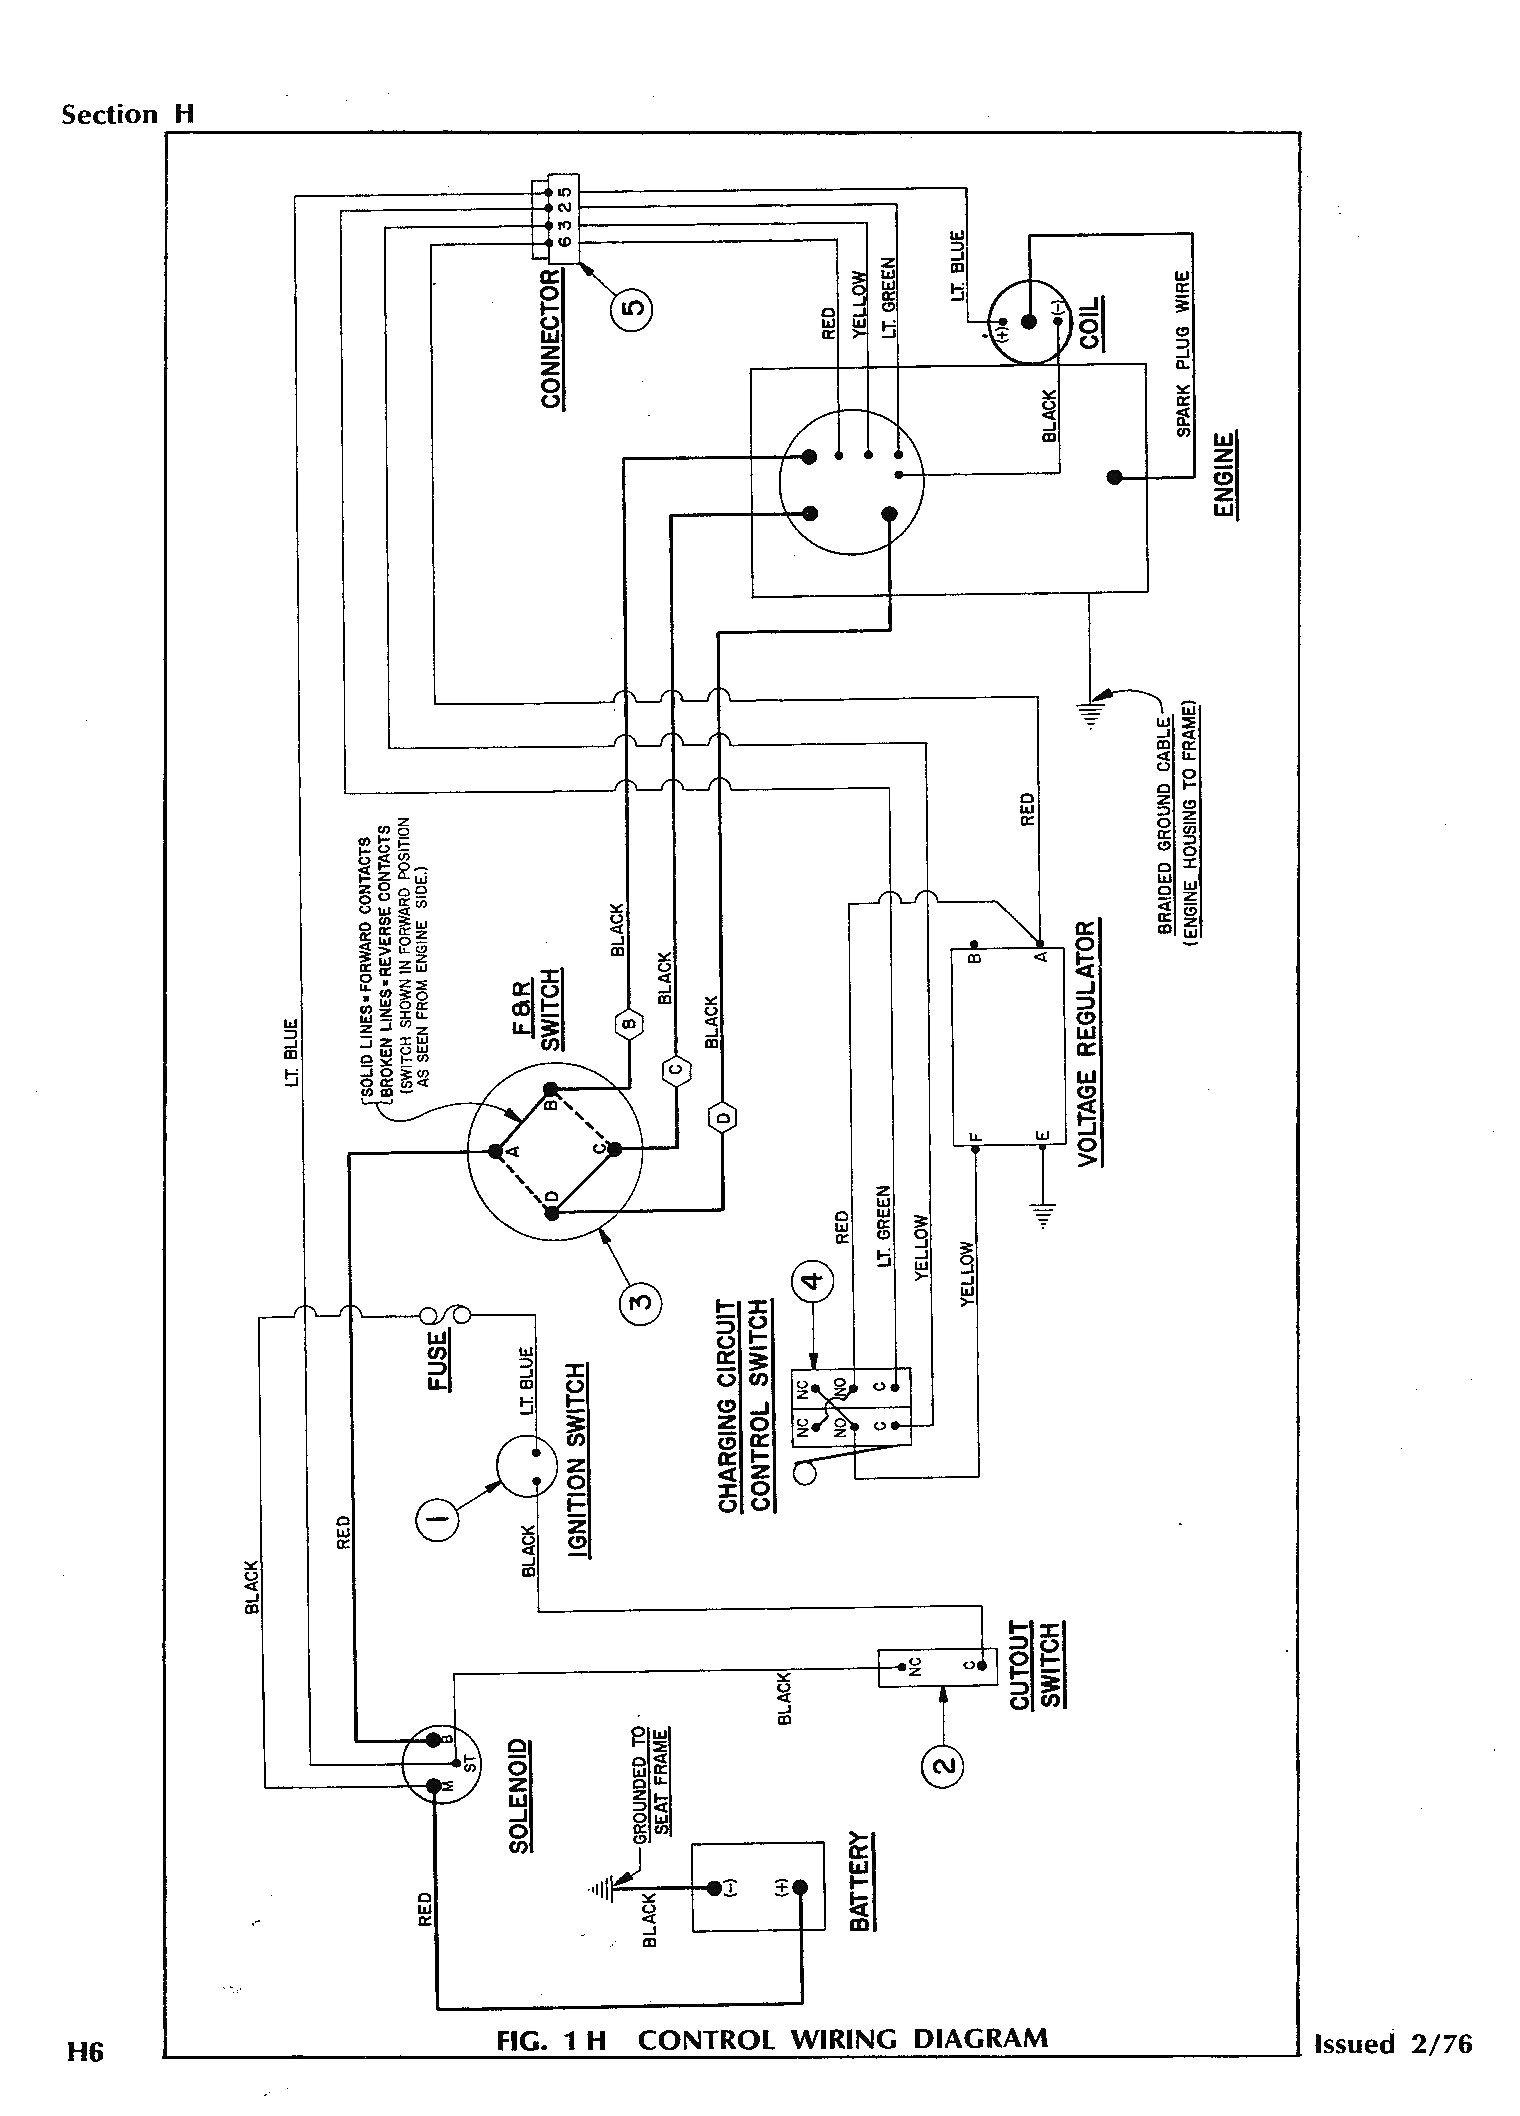 1997 ezgo workhorse wiring diagram wiring diagram fascinating 1997 ezgo workhorse wiring diagram